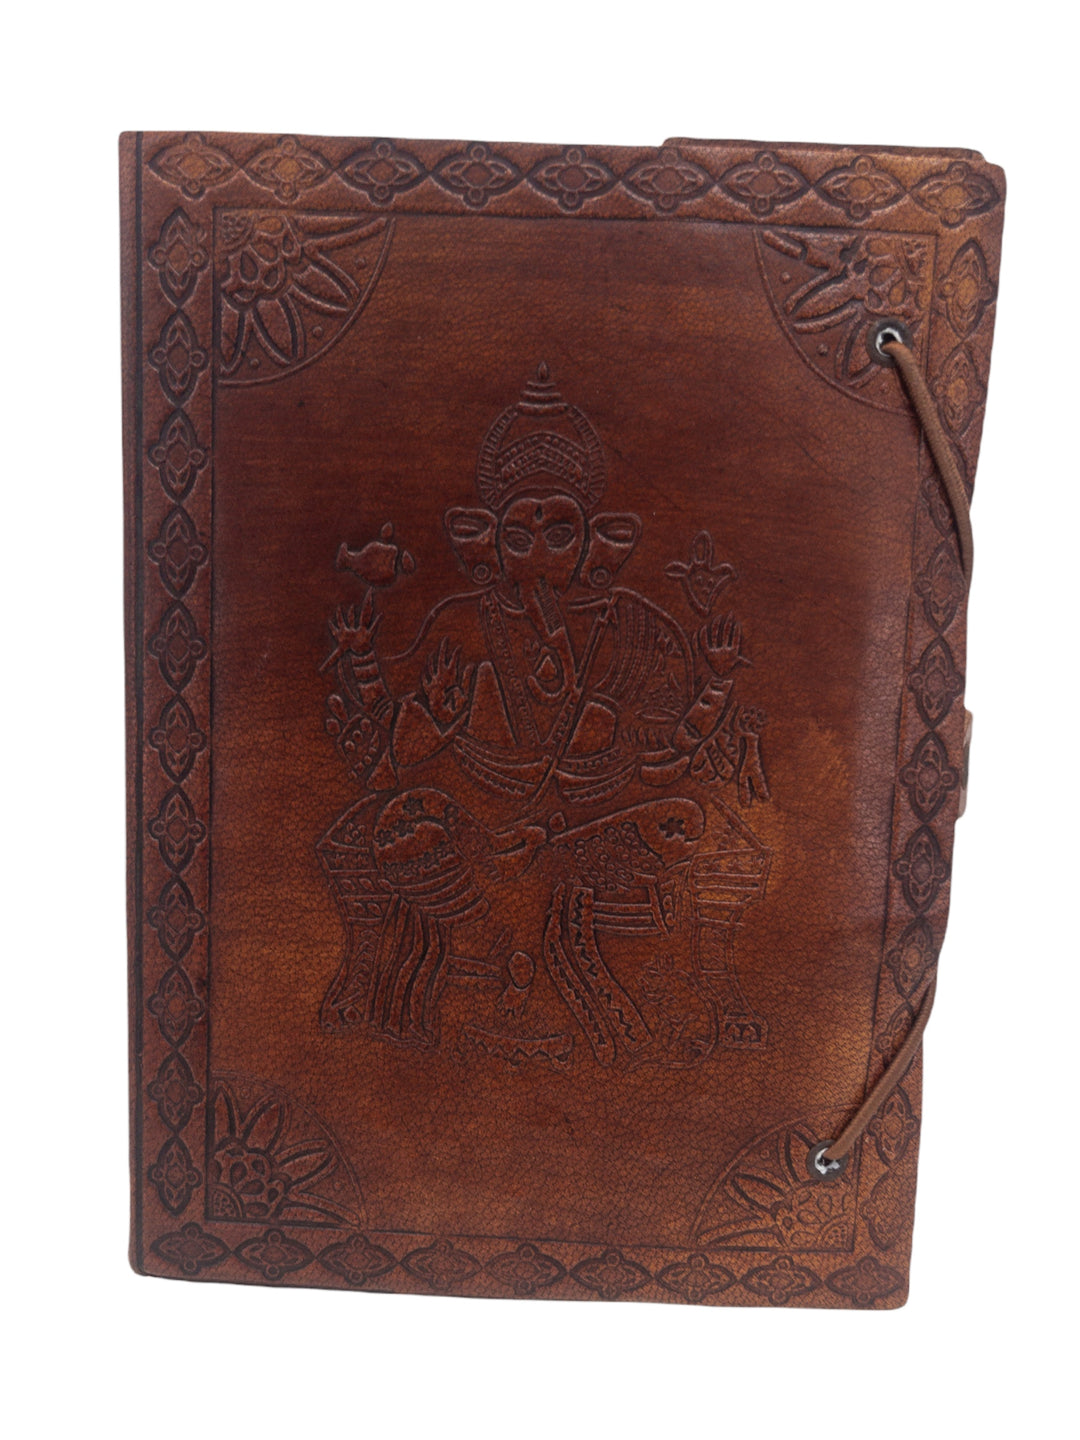 Ganesha Leather Bound rice paper Journal